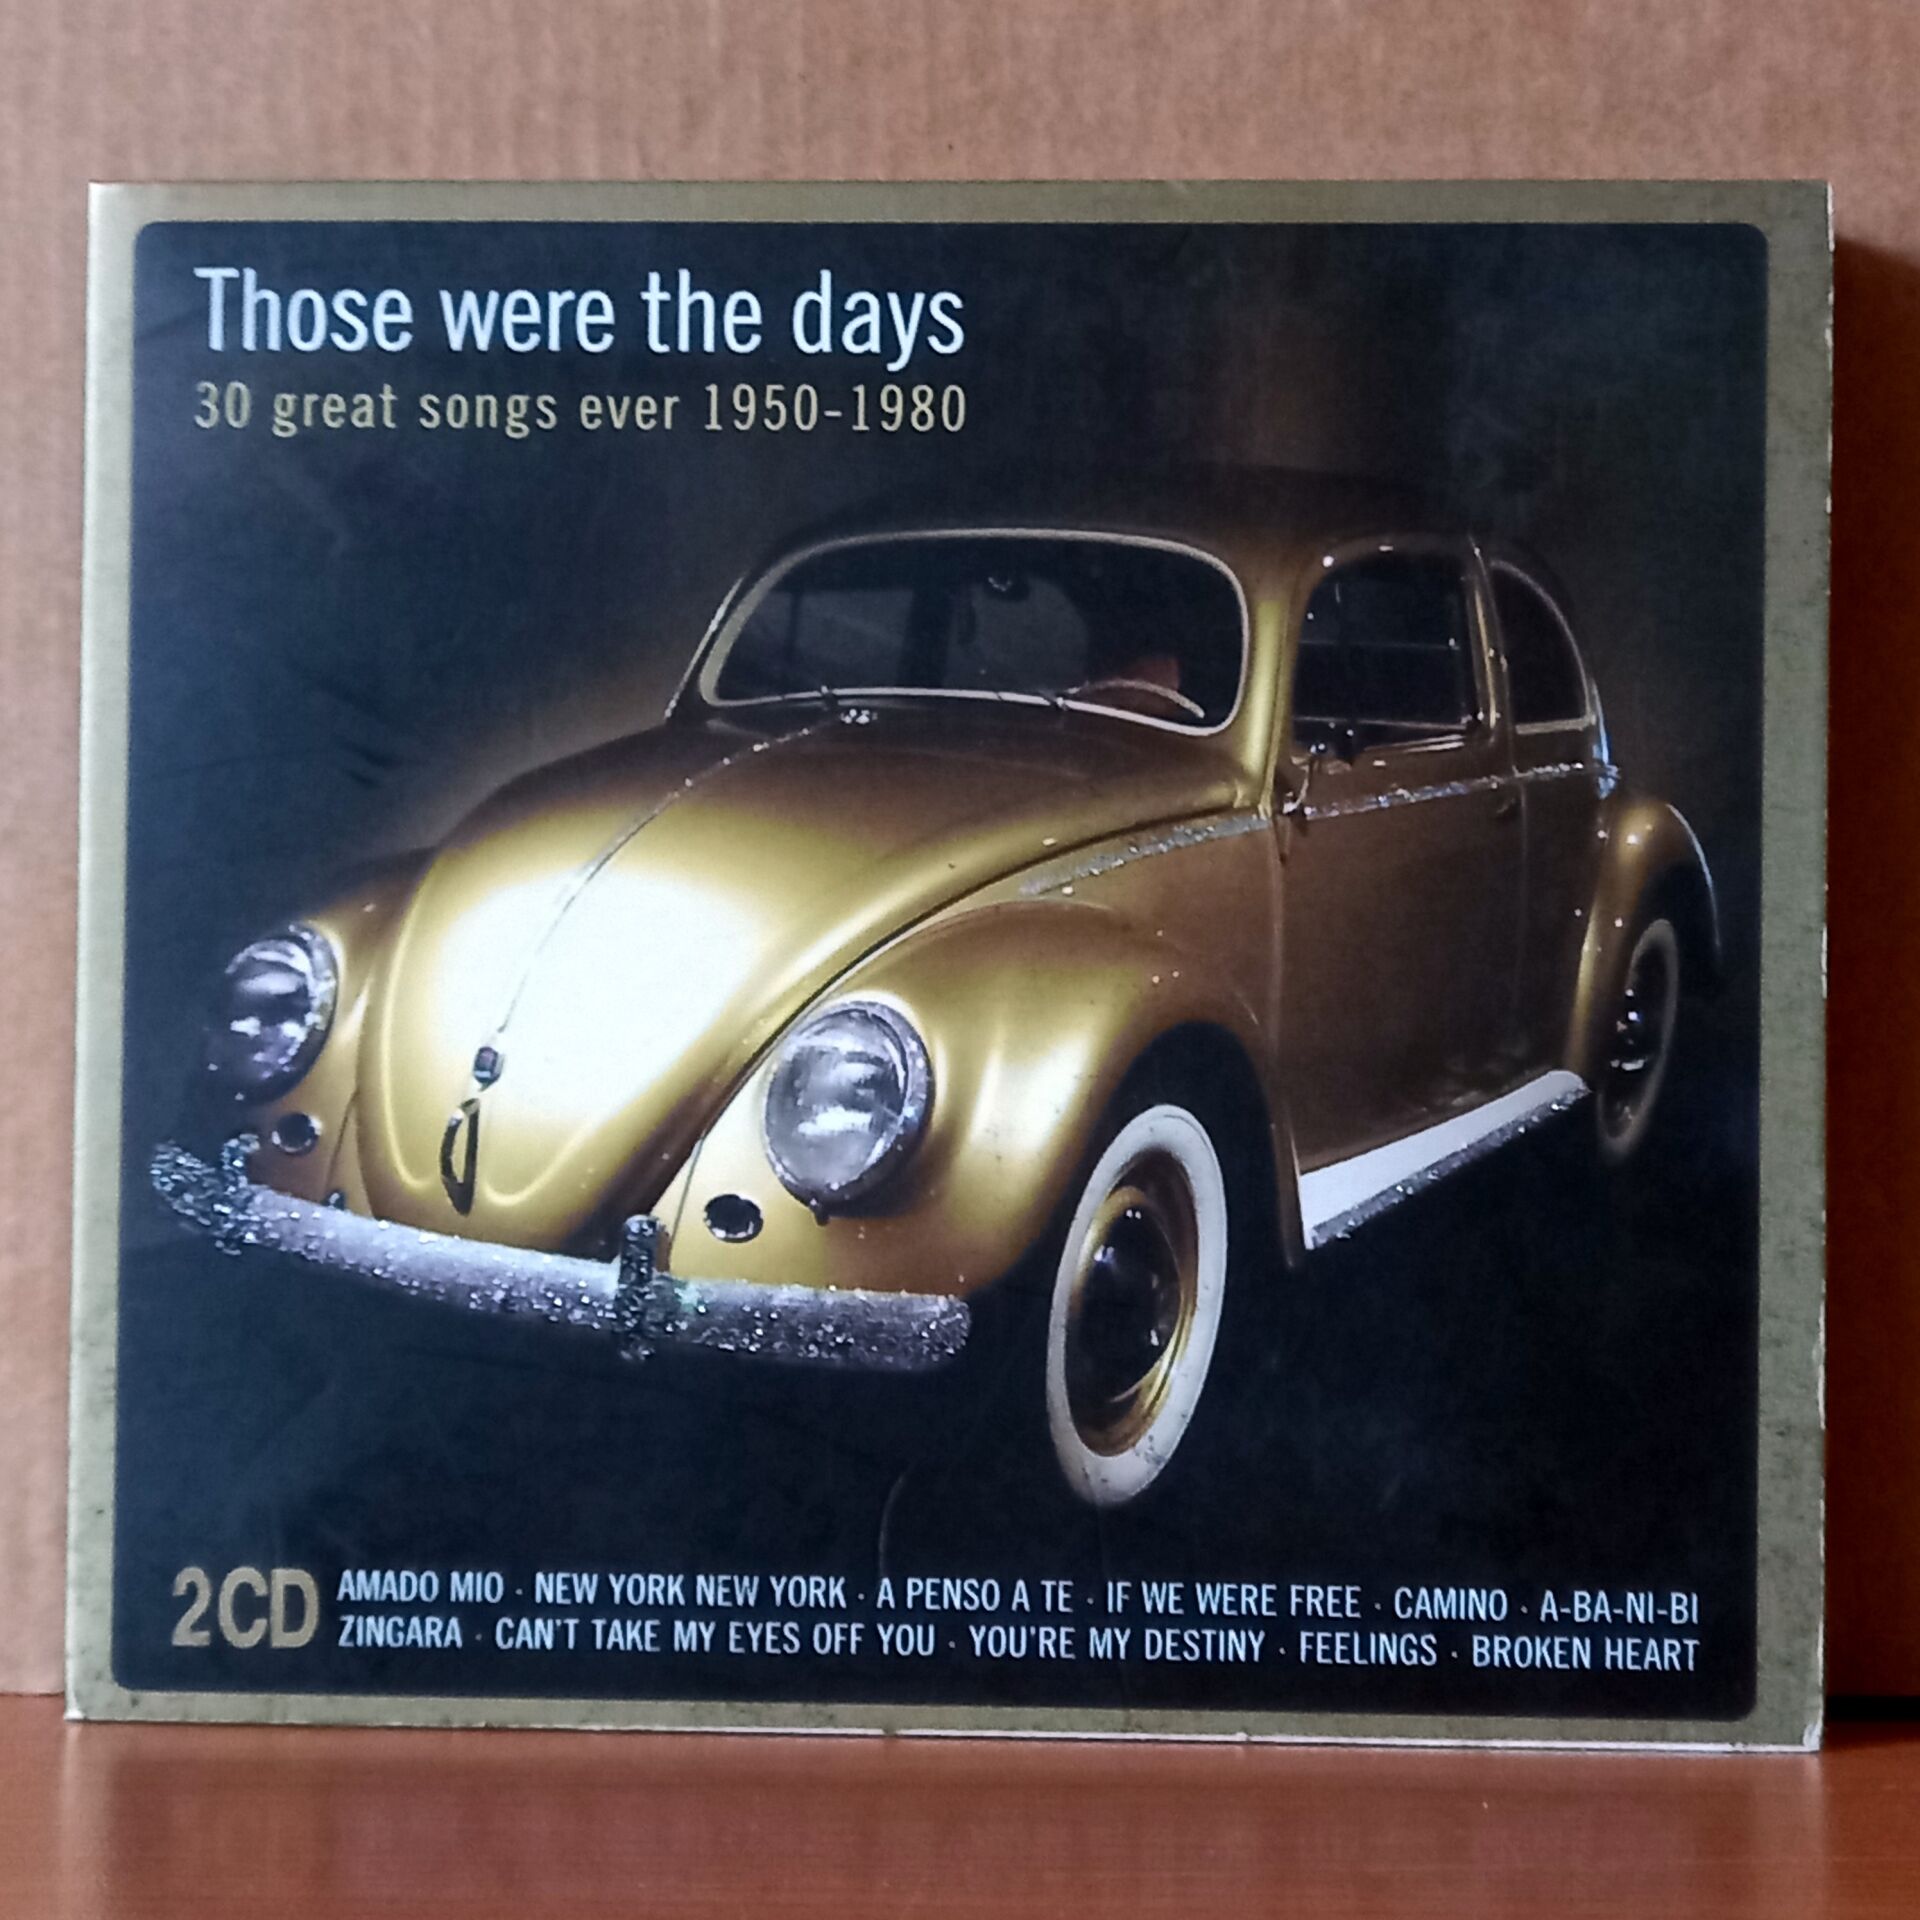 THOSE WERE THE DAYS / 30 GREAT SONGS EVER 1950-1980 / DALIDA, MINA, TINO ROSSI, DEMIS ROUSSOS, LOS DIABLOS, MARY HOPKIN, AL MARTINO (2008) - 2CD 2.EL